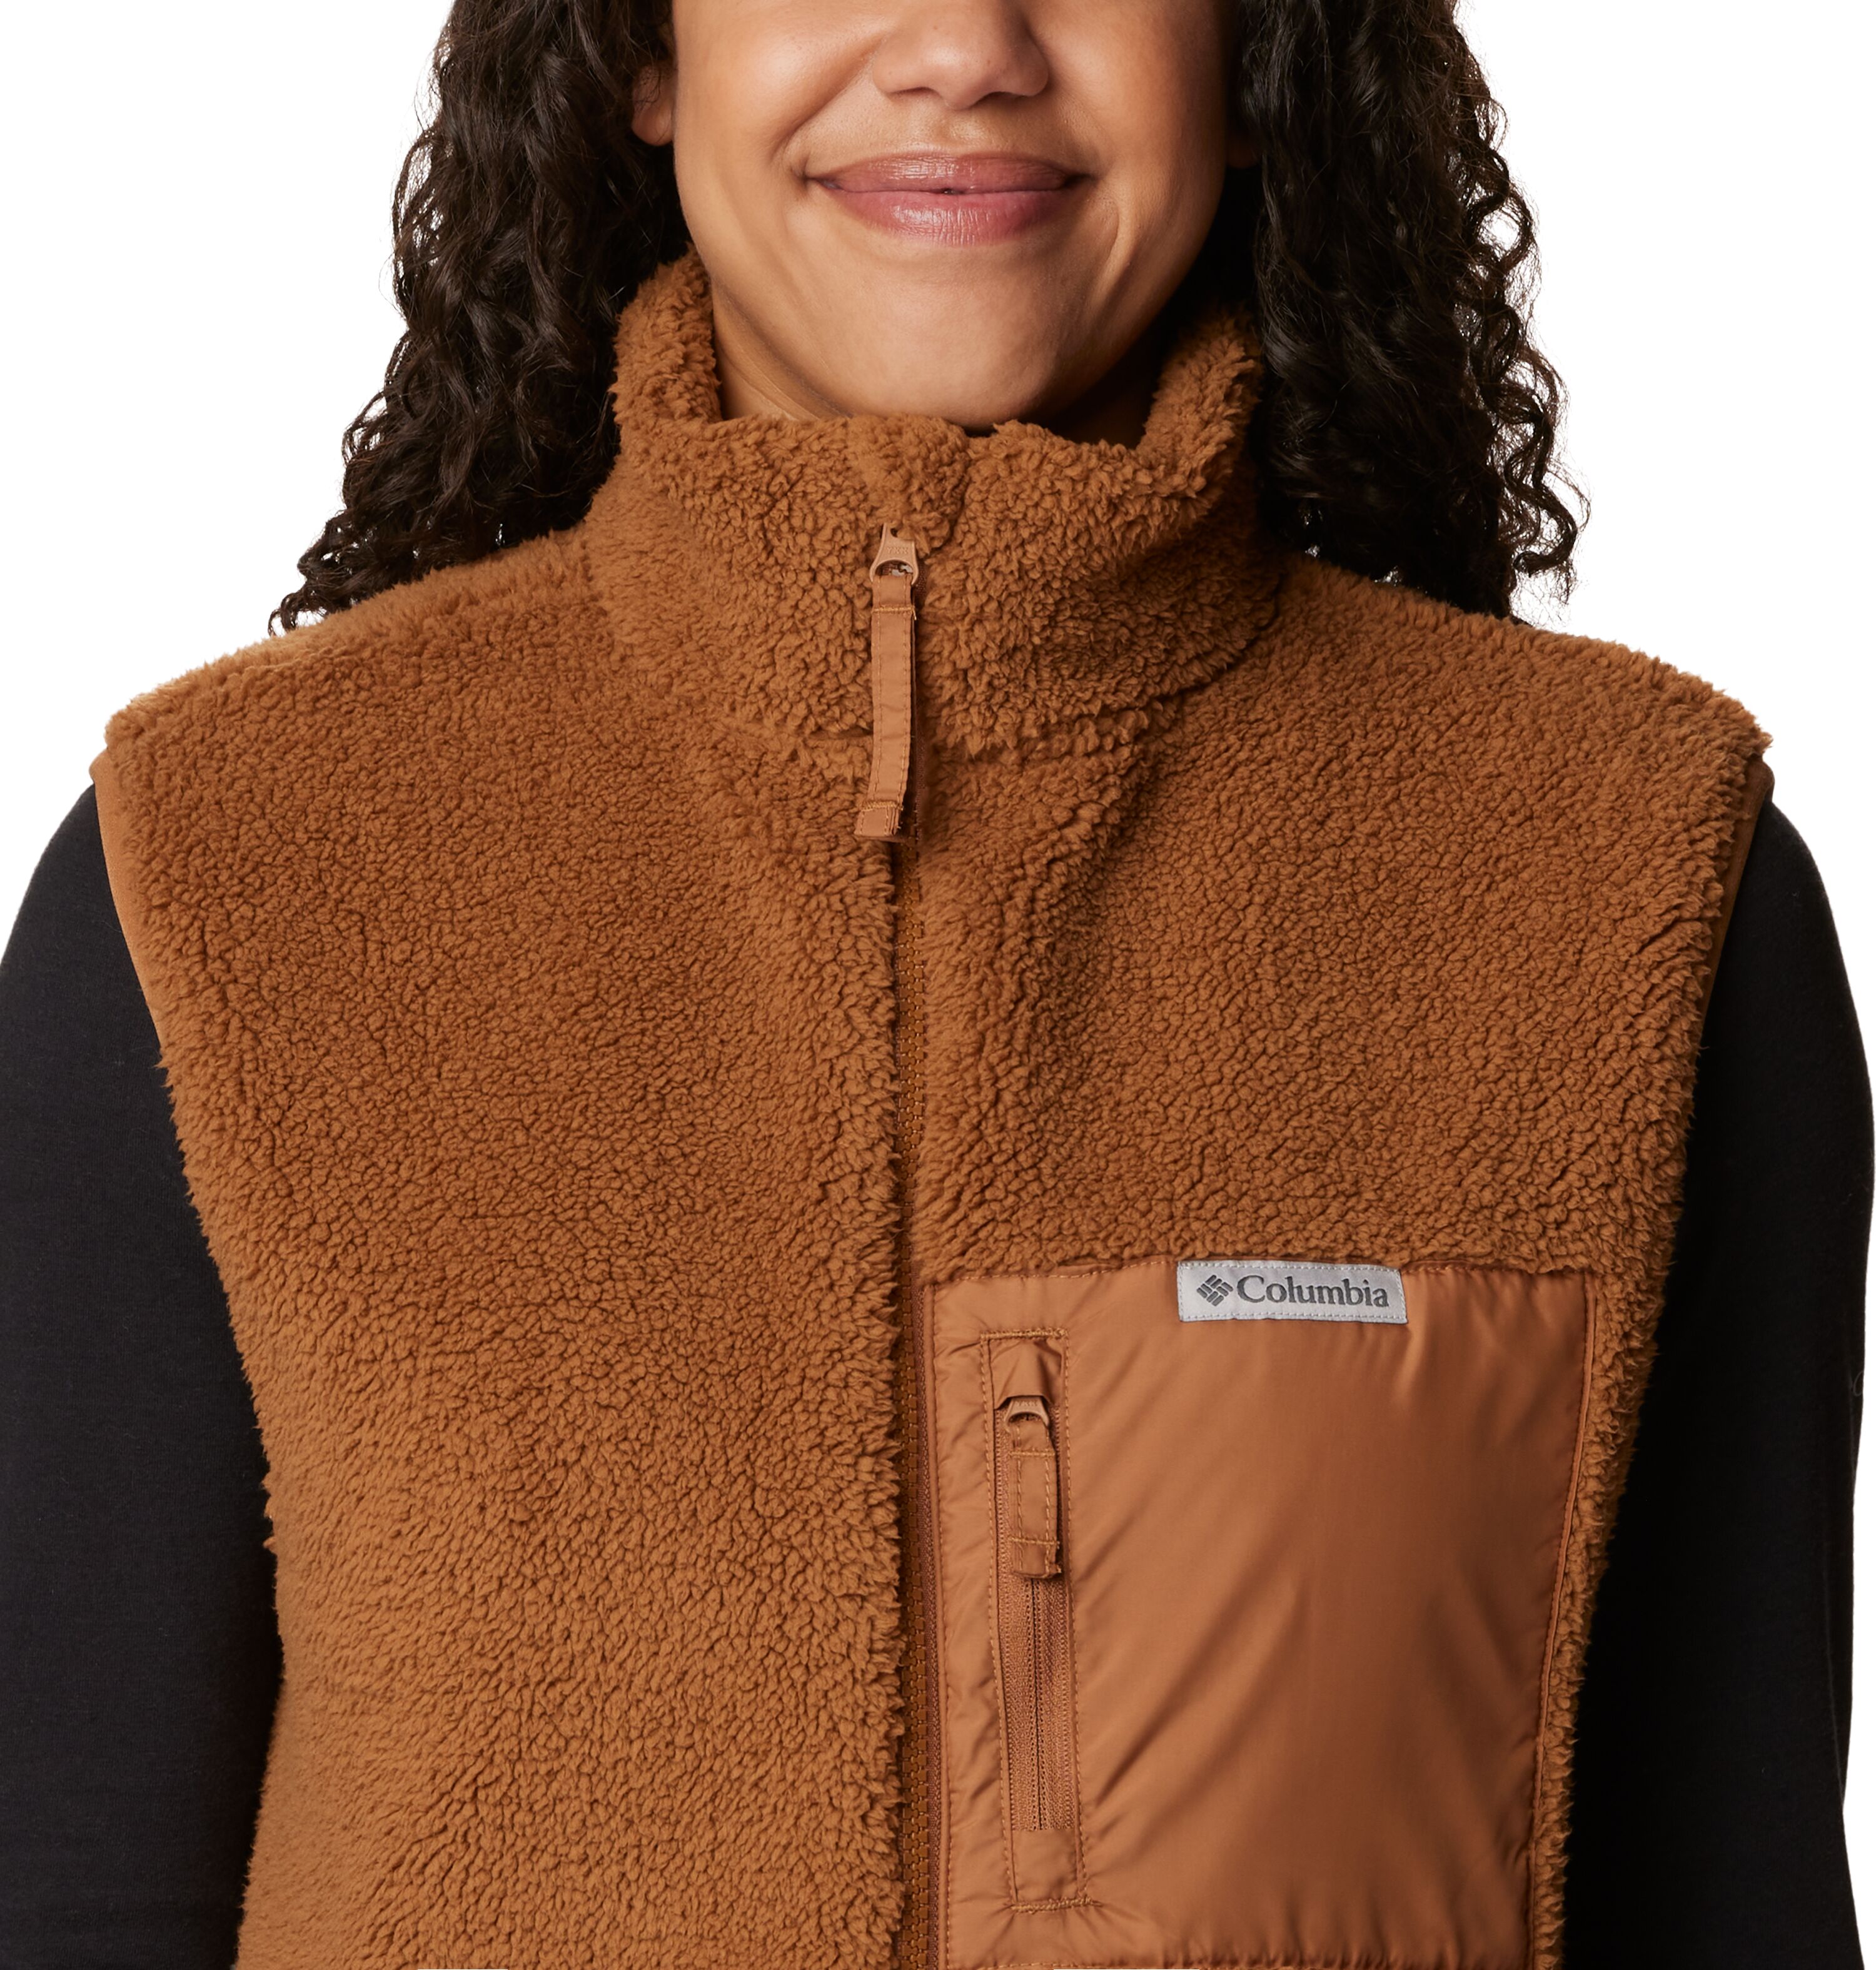 Women's Holly Hideaway Vest in Camel Brown